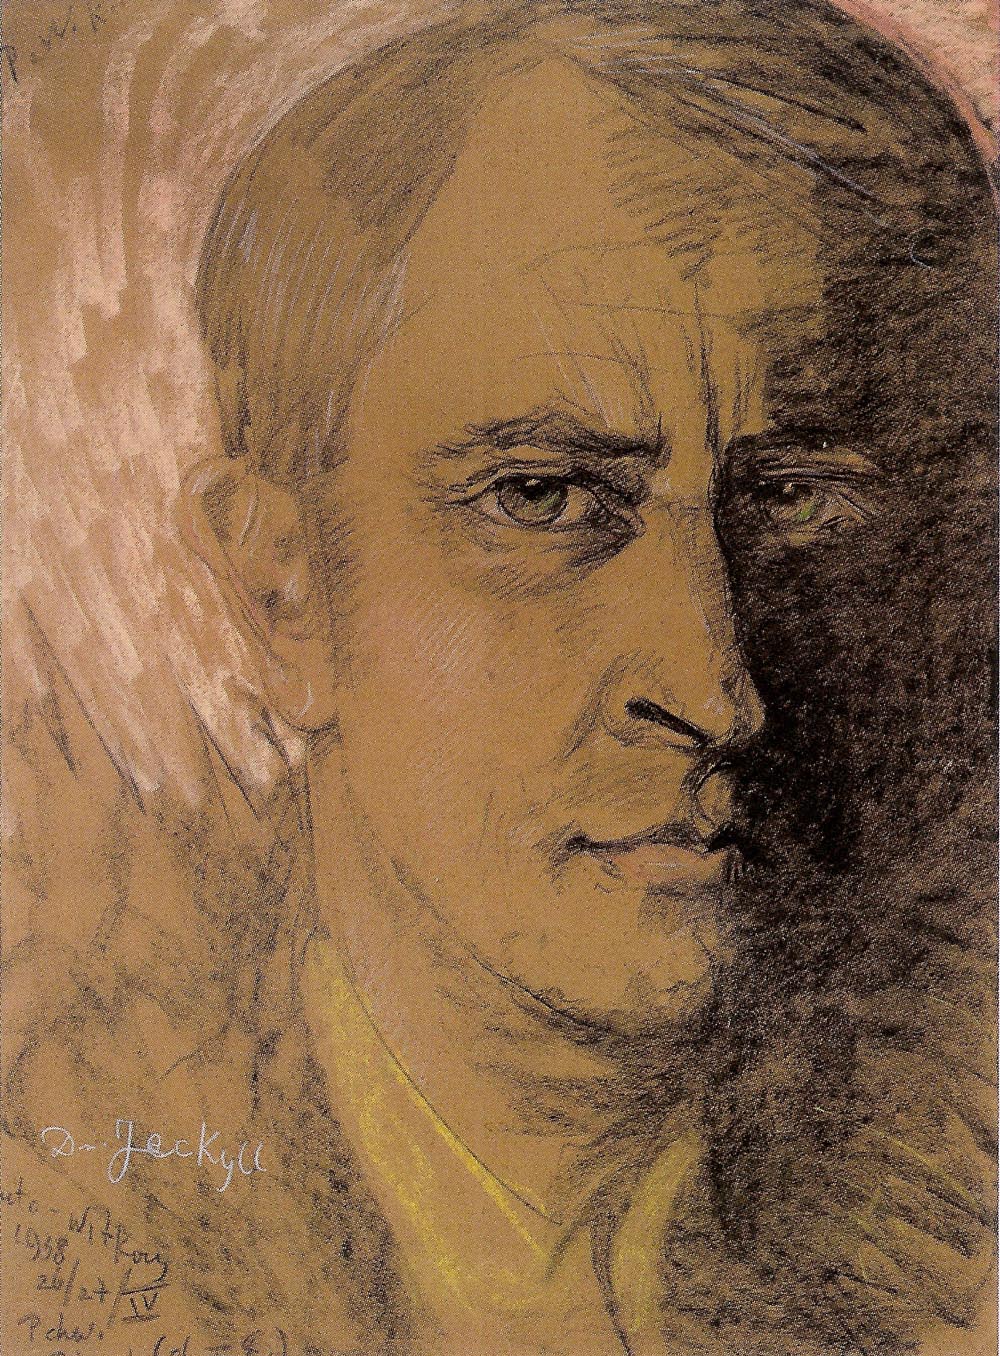 Dr. Jeckyll (Self-Portrait)